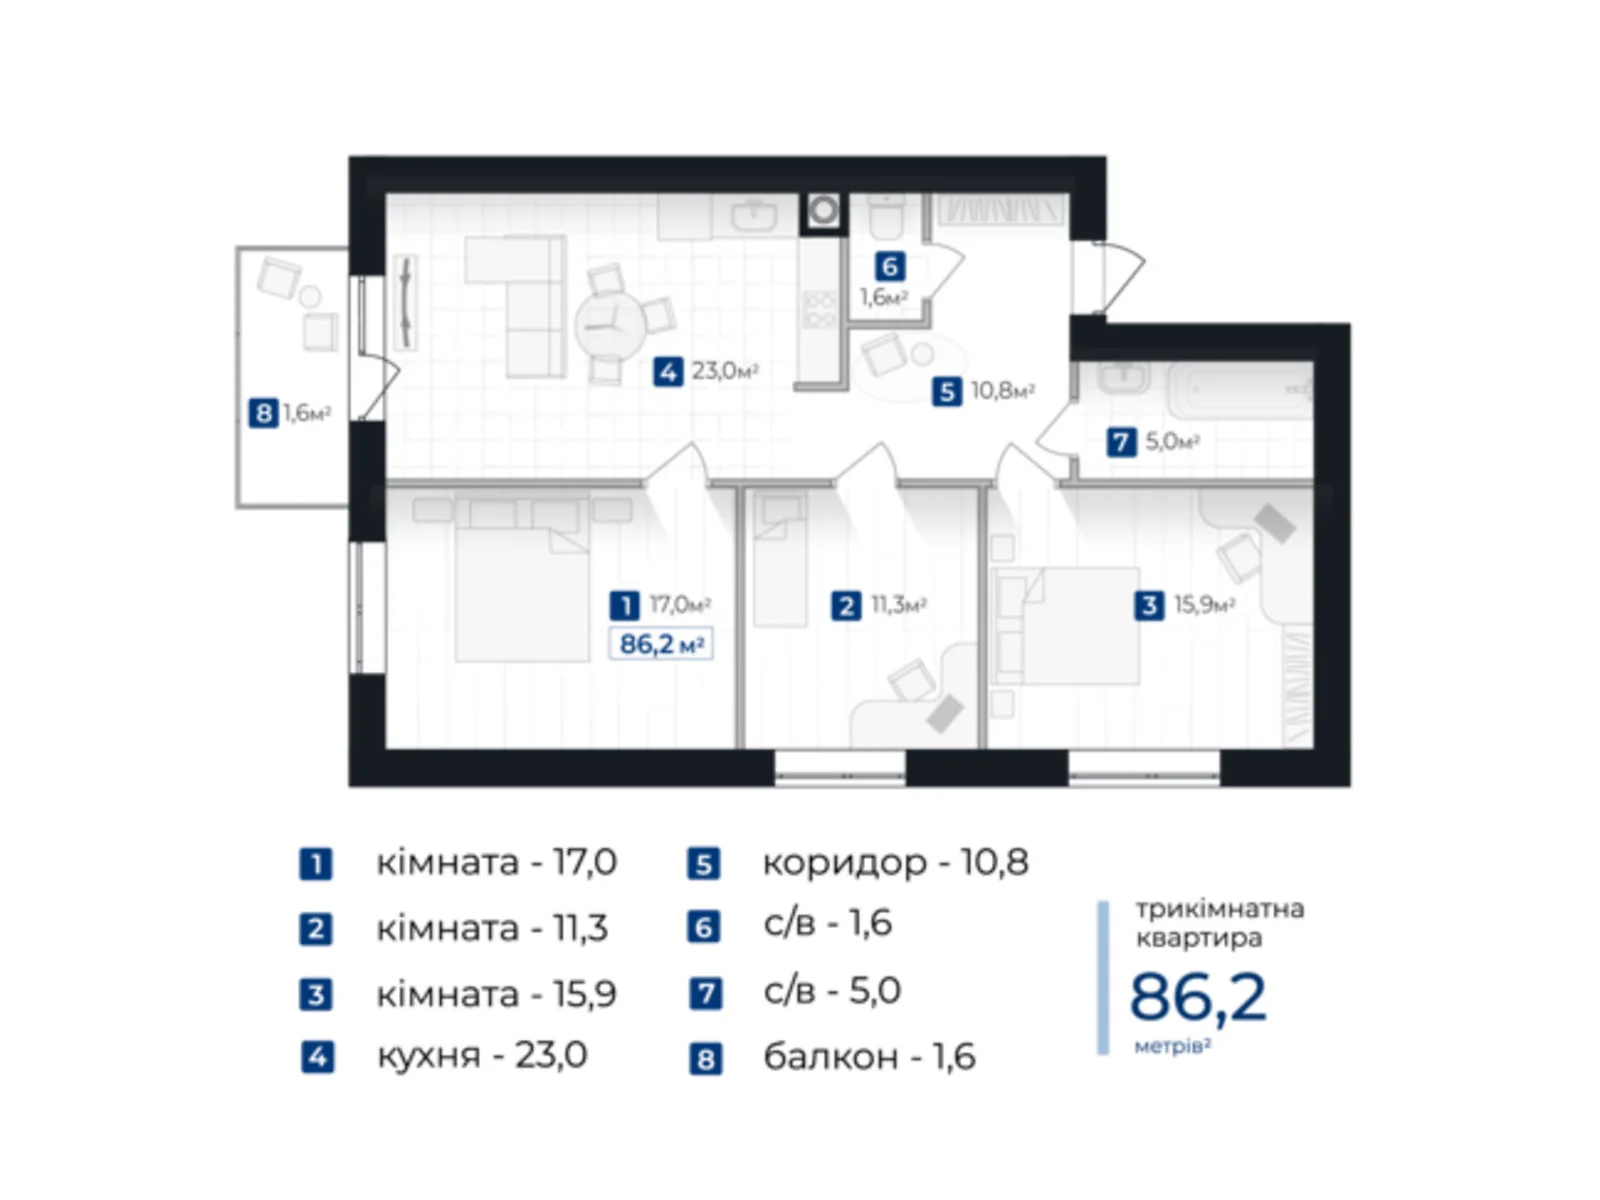 Продается 3-комнатная квартира 86.2 кв. м в Ивано-Франковске, цена: 71546 $